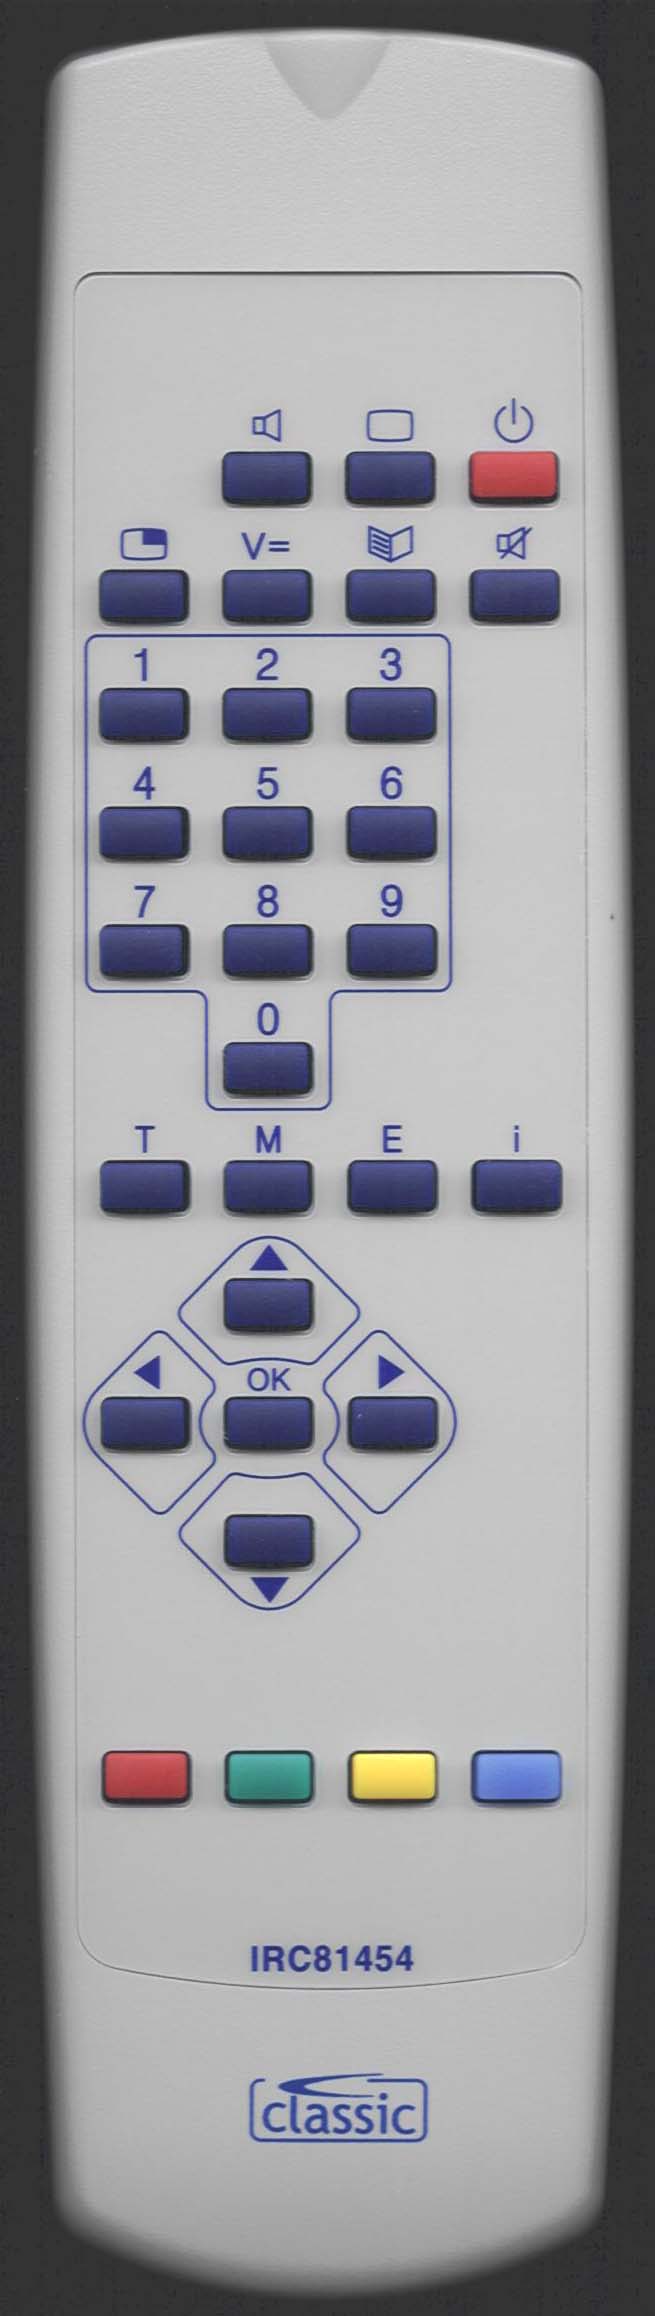 Loewe CONTROL 100 TV Remote Control